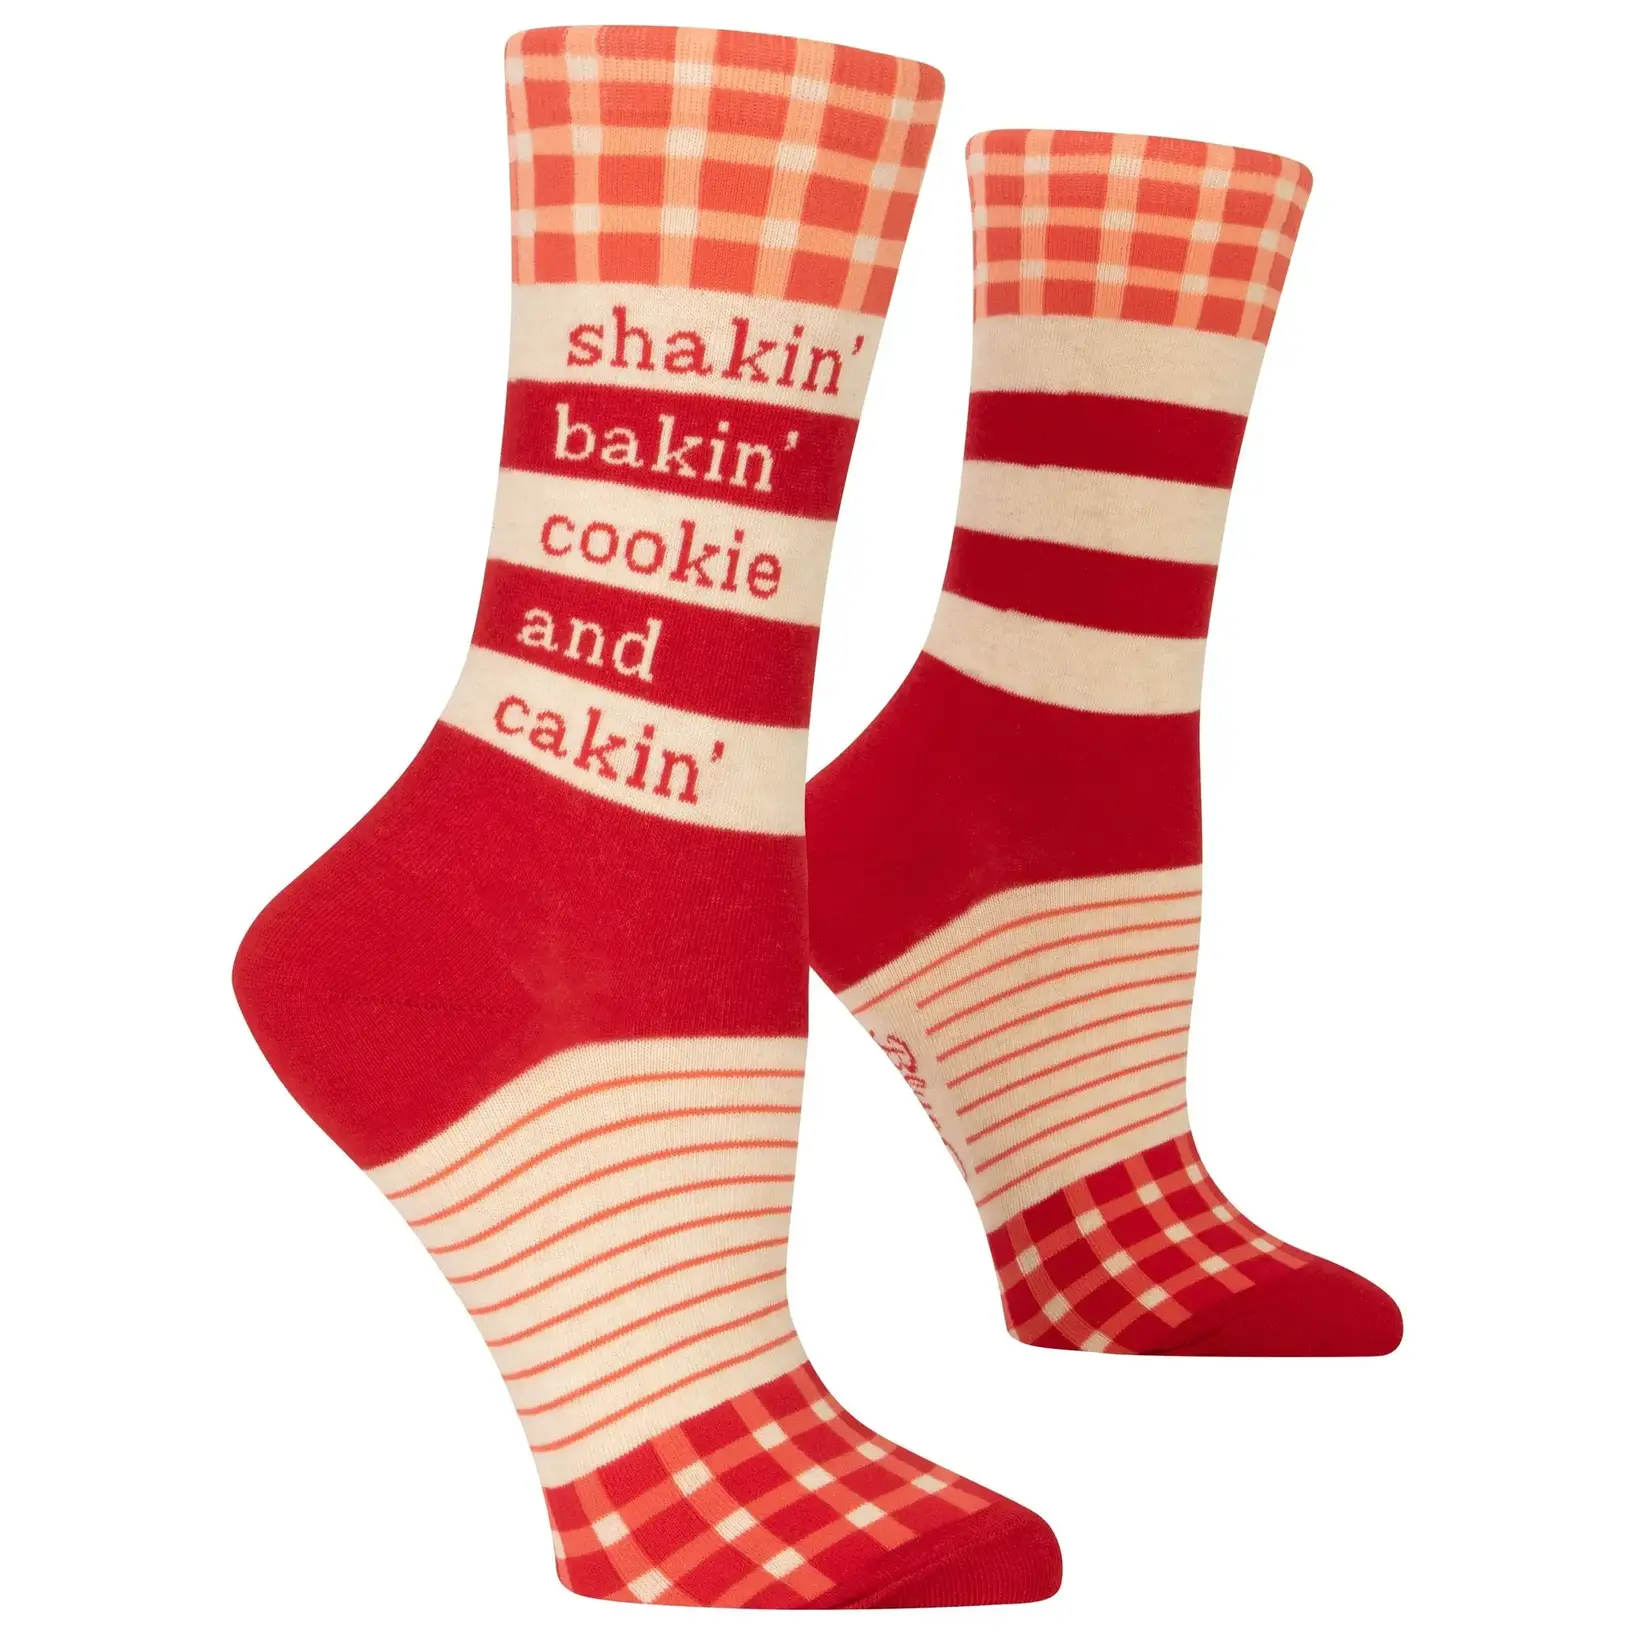 Socks (Womens) - Shakin' Bakin' Cookie and Cakin'